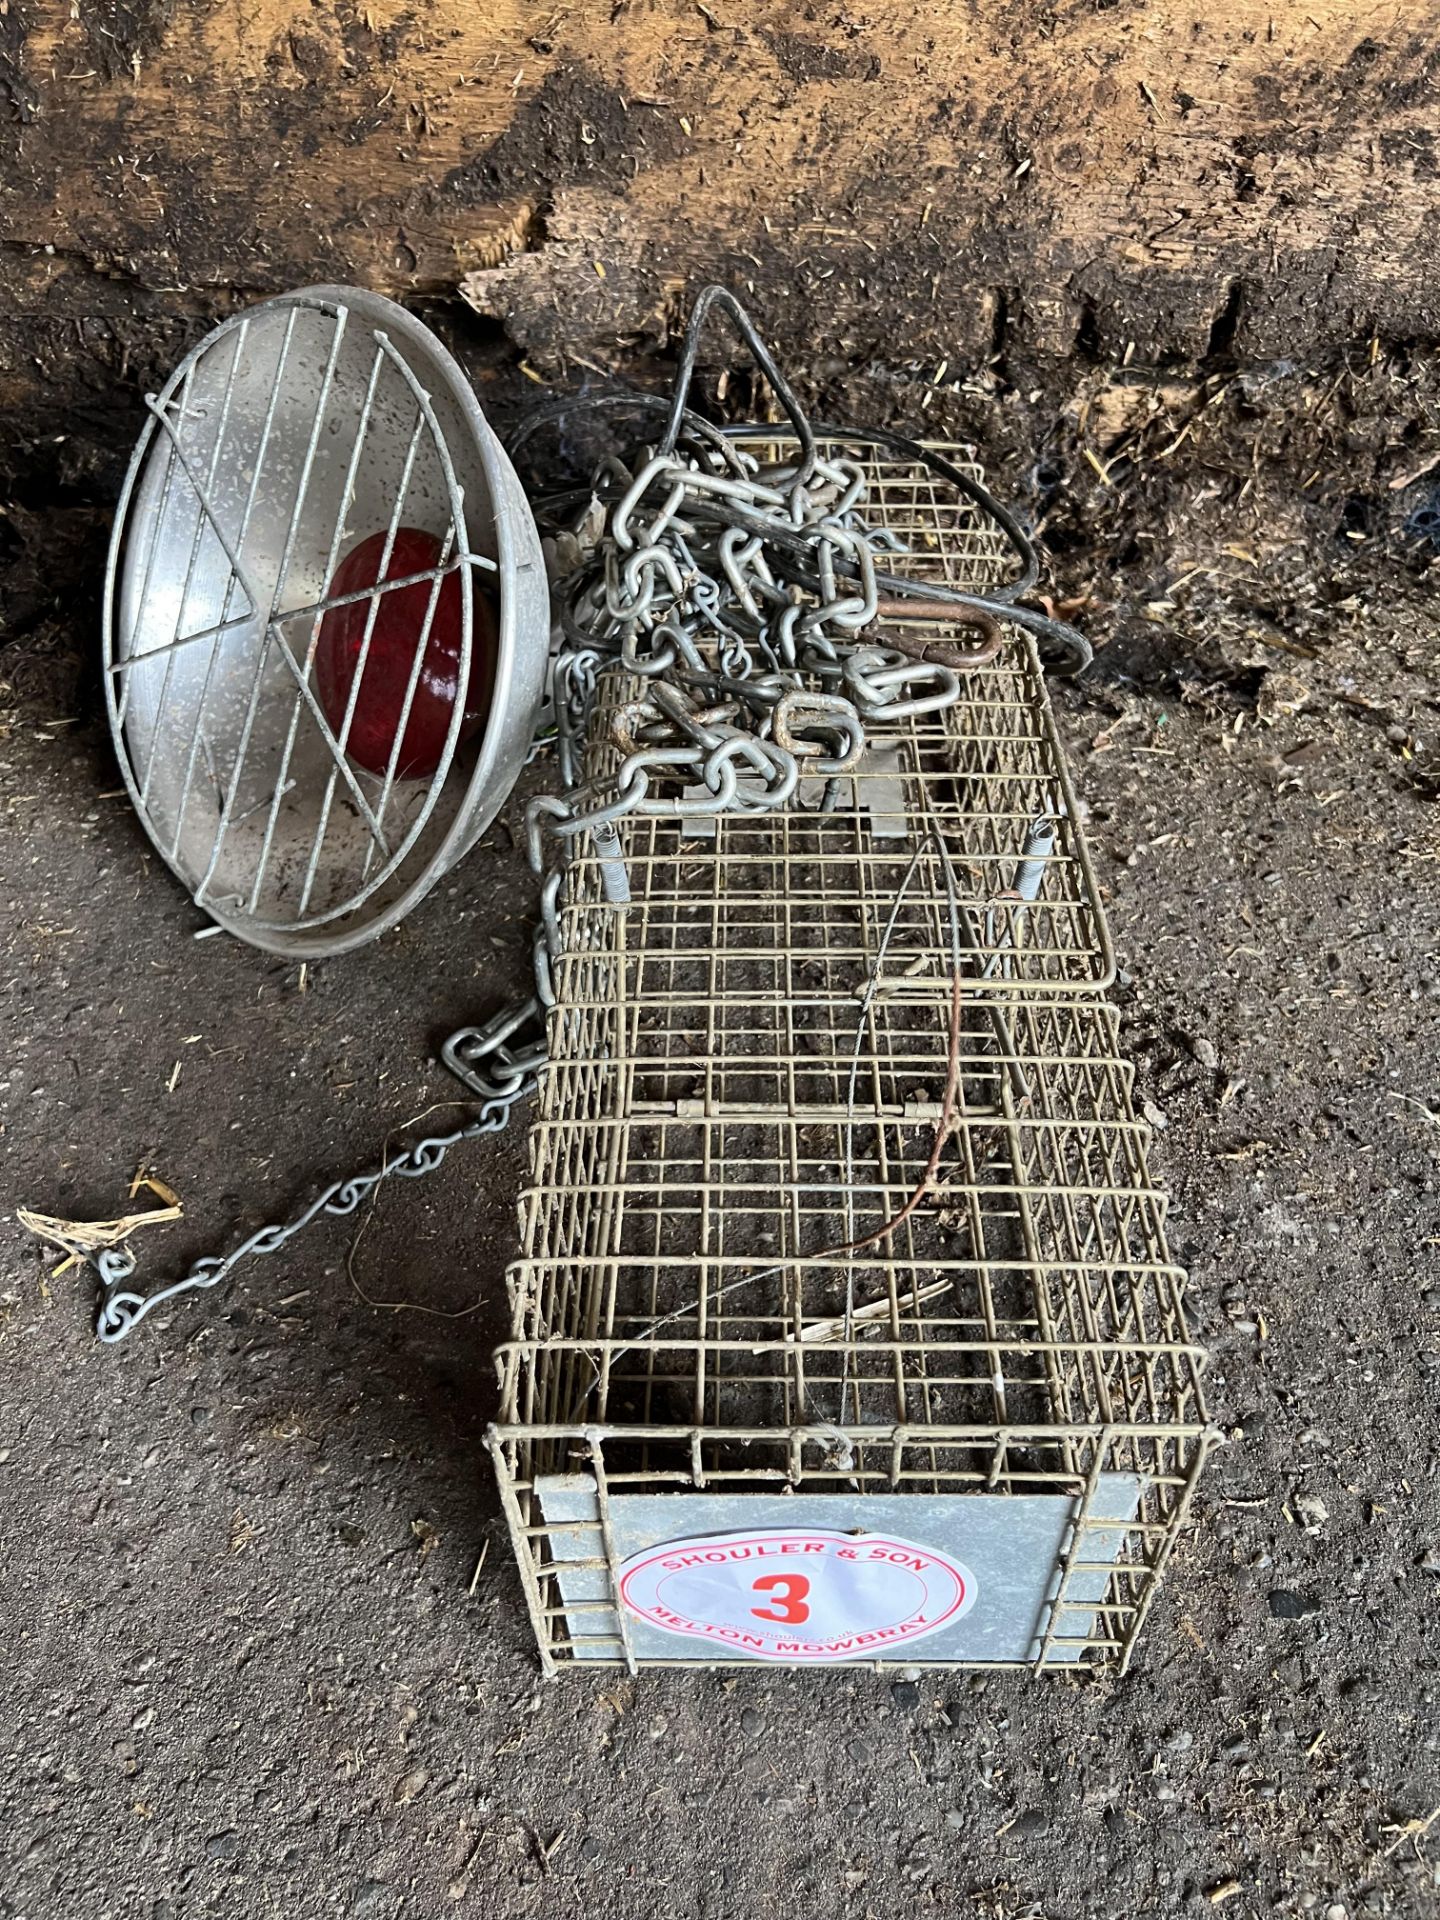 Heat Lamp and Rat Trap